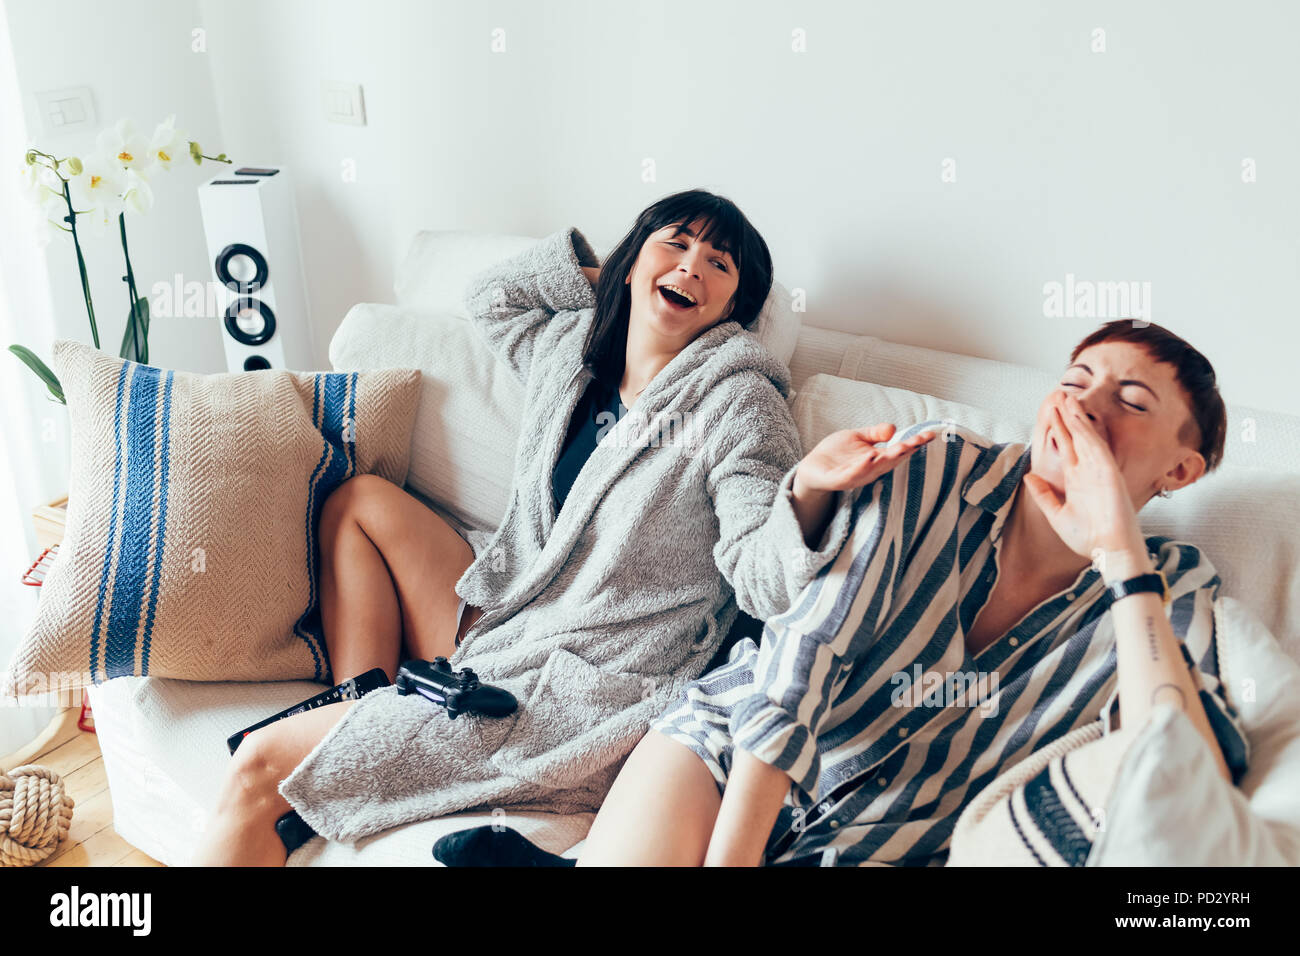 Women in nightwear relaxing on sofa, laughing Stock Photo